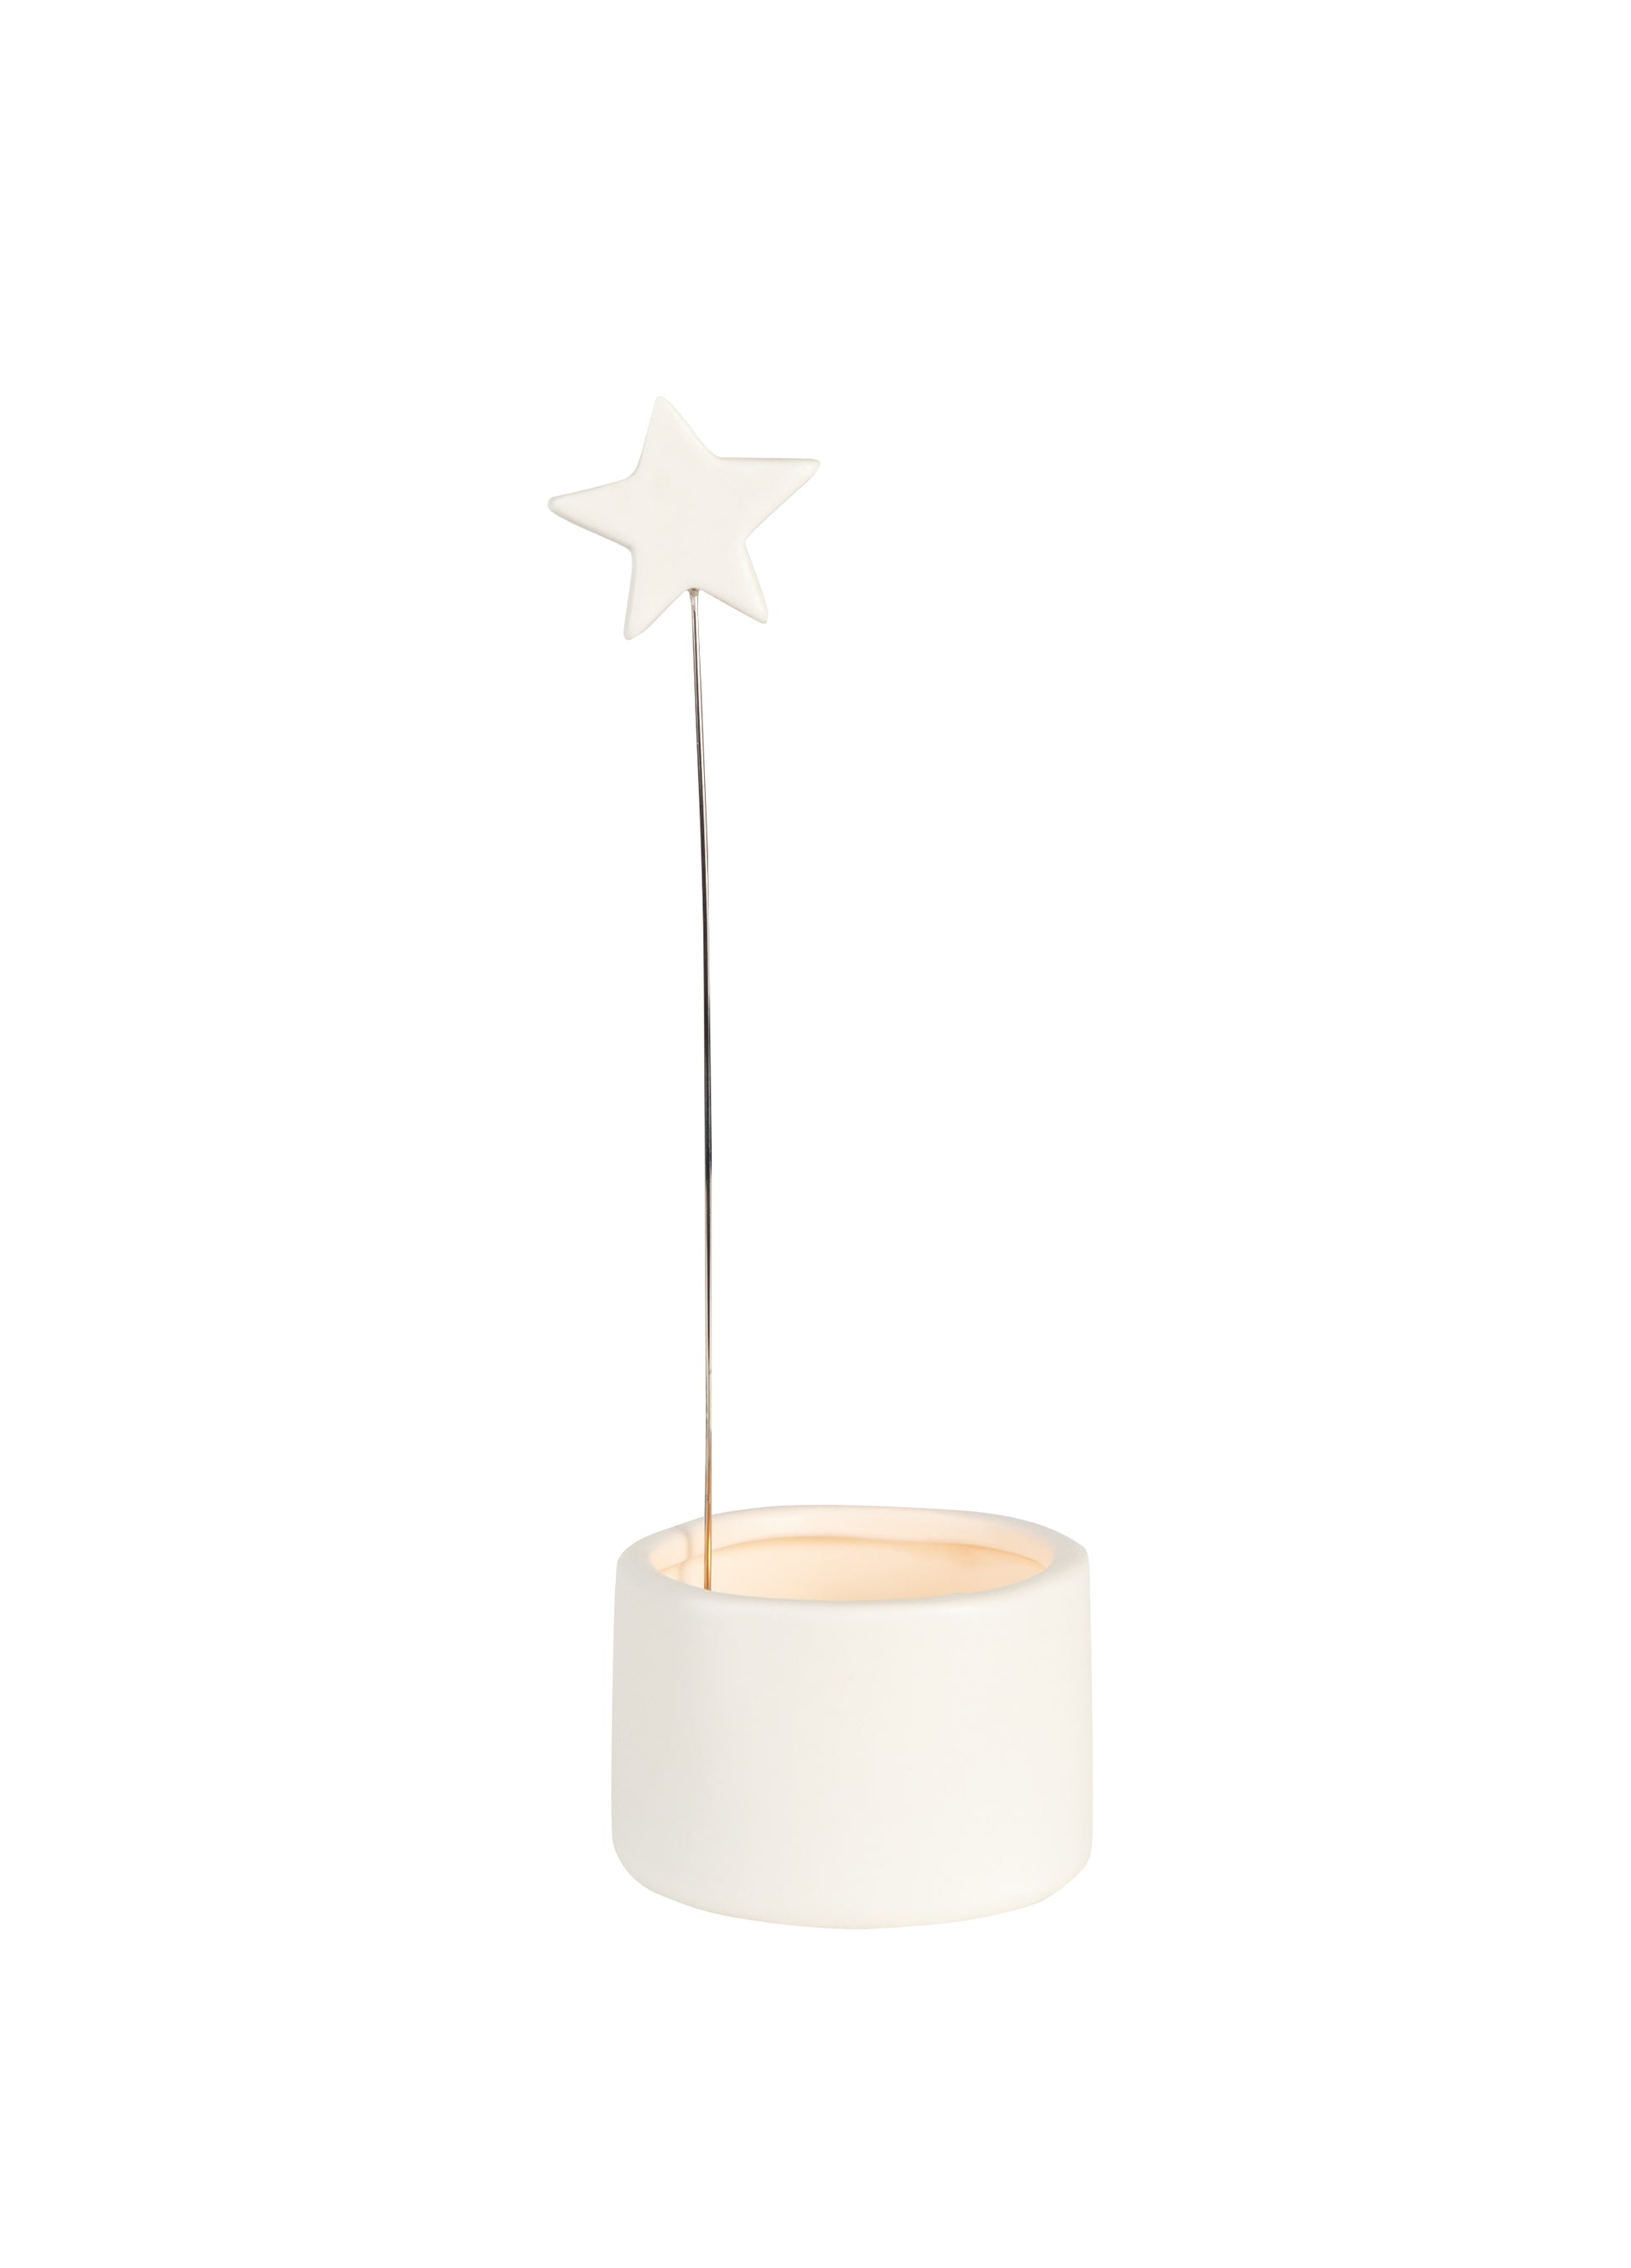 white porcelain tealight holder with suspended star motif